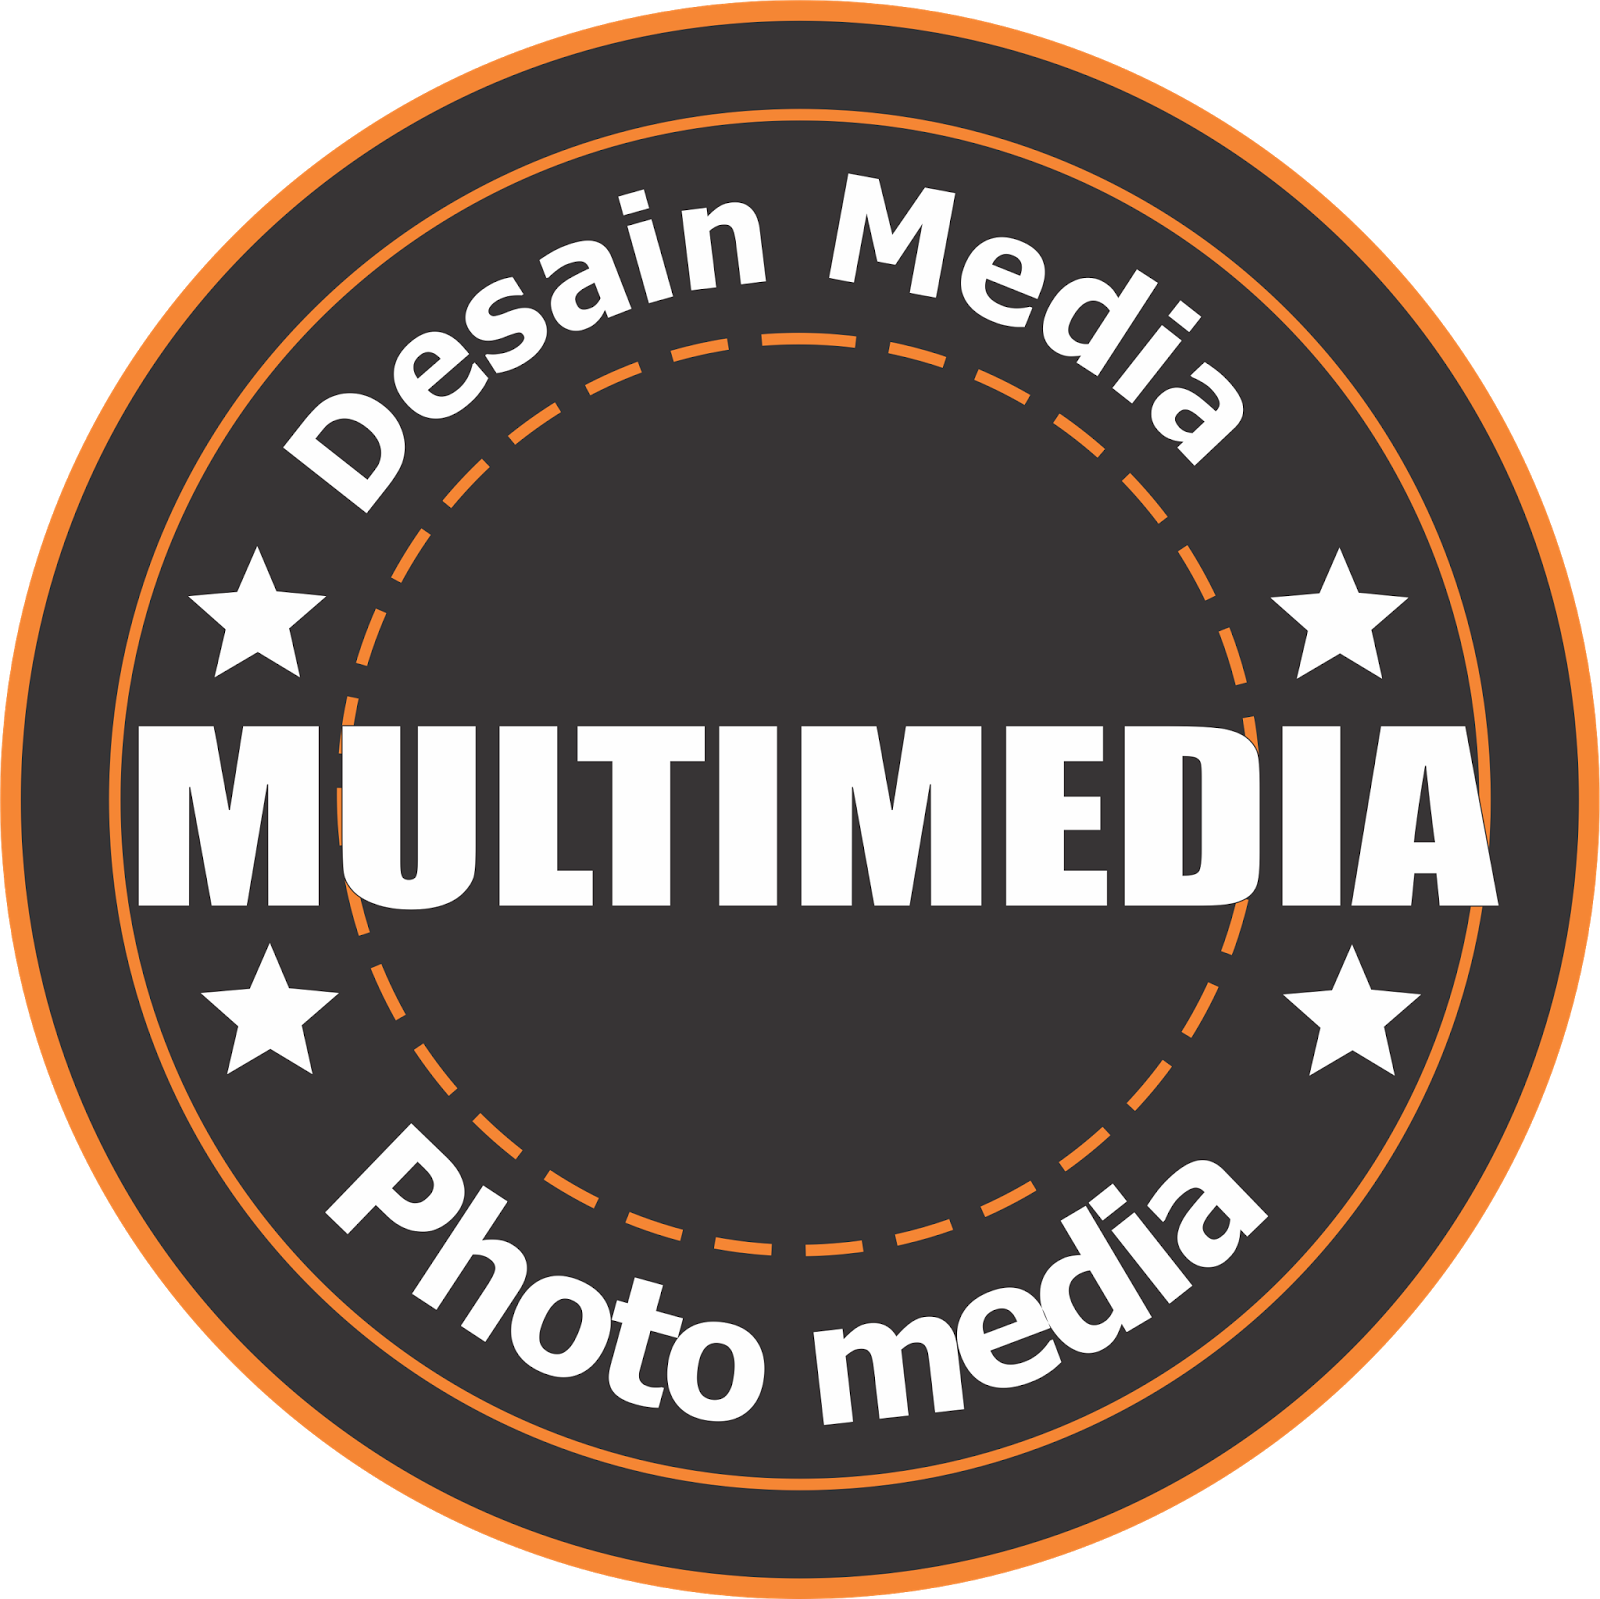 Panduan Desain Lengkap Membuat Logo Multimedia Kurang Dari Menit | My